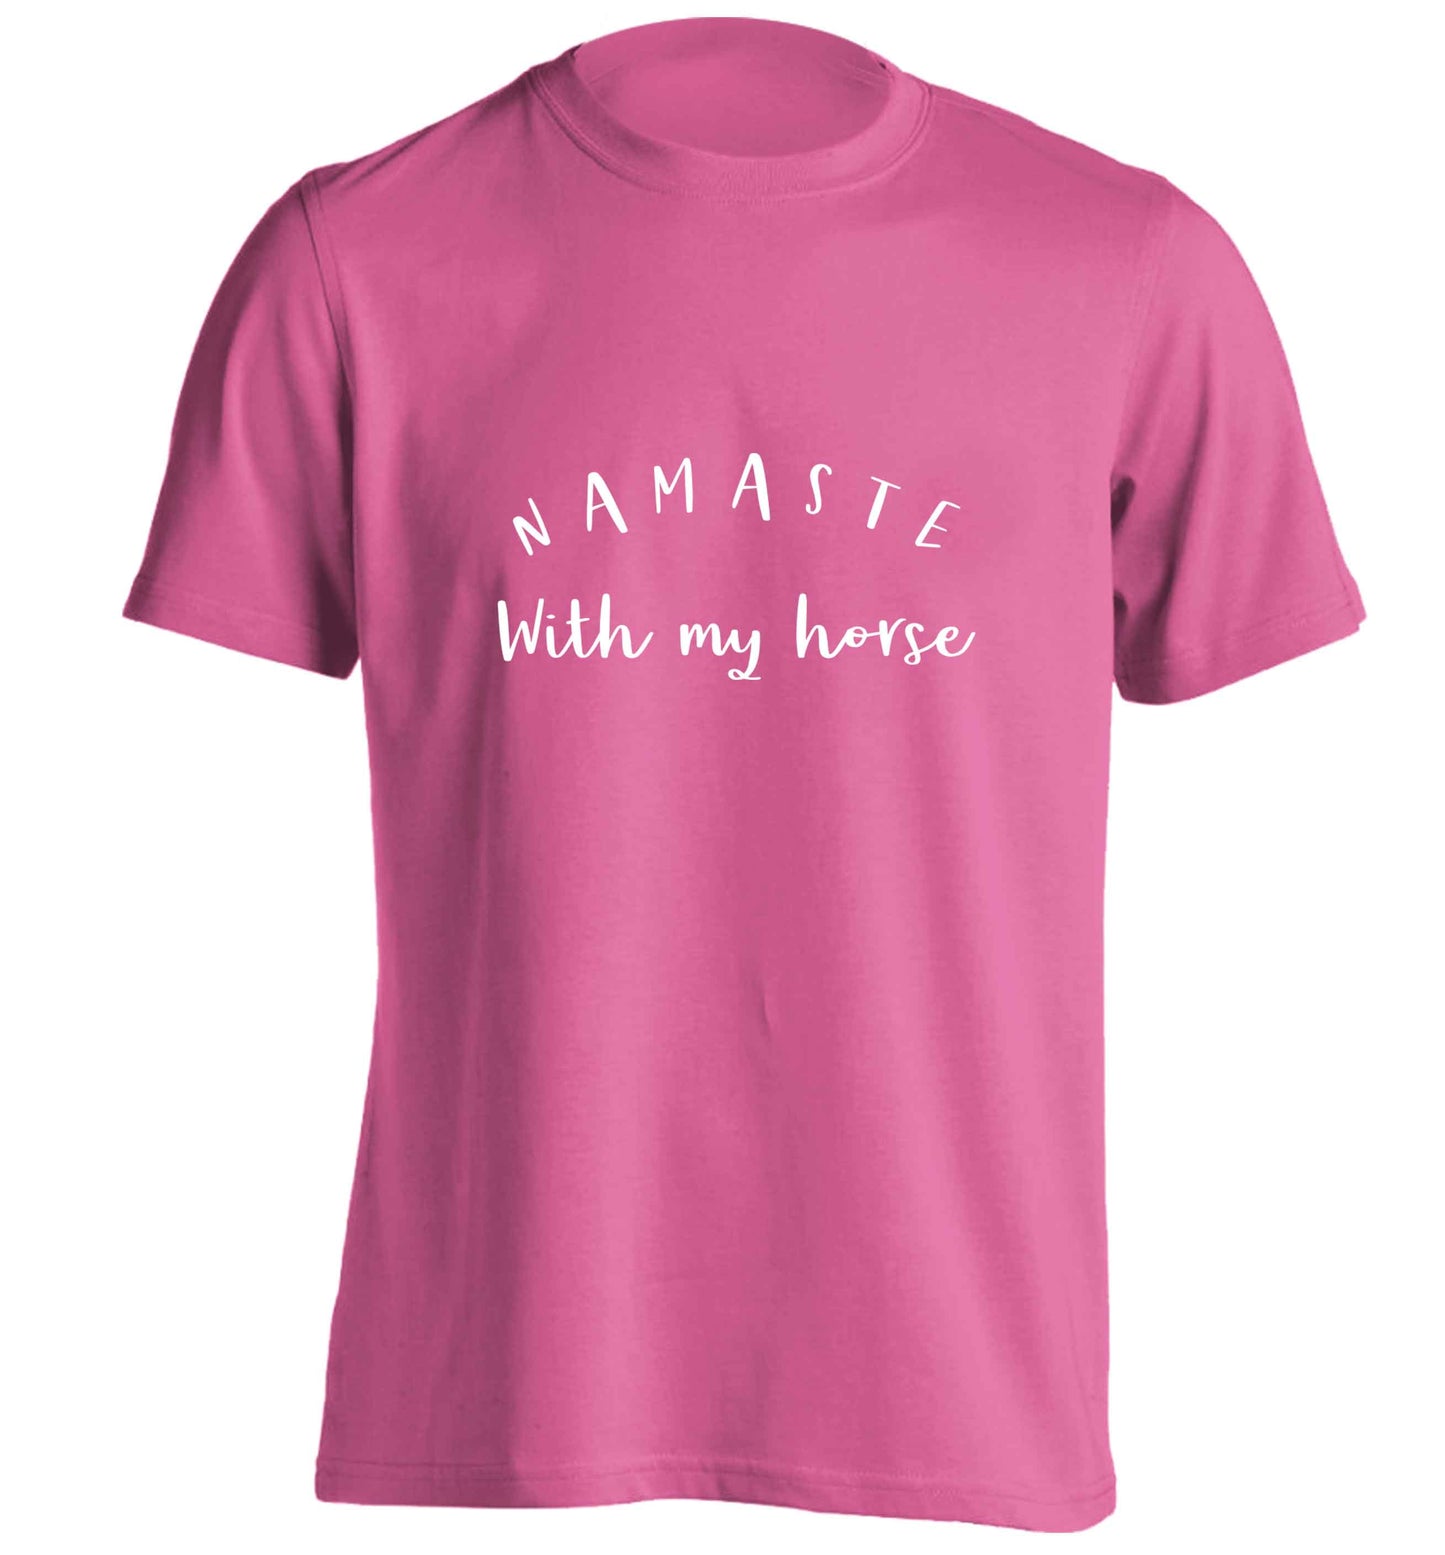 Namaste with my horse adults unisex pink Tshirt 2XL